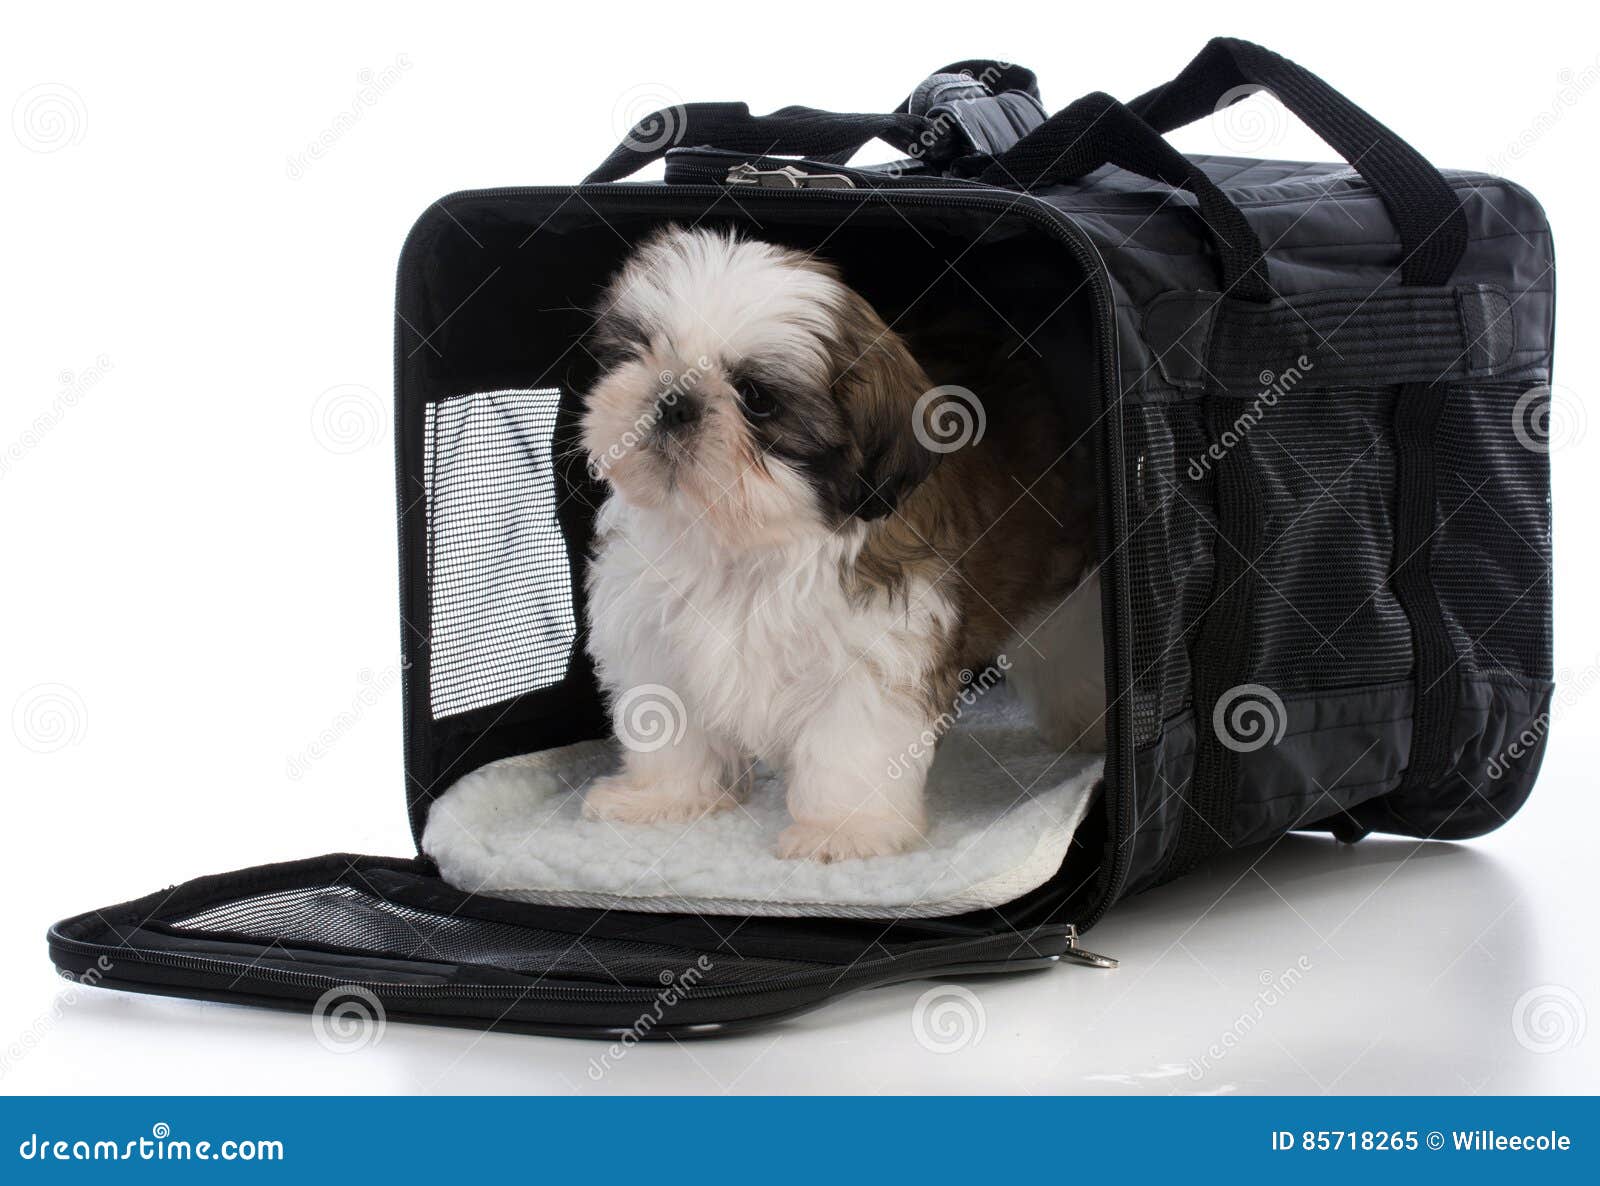 puppy in travel carrier